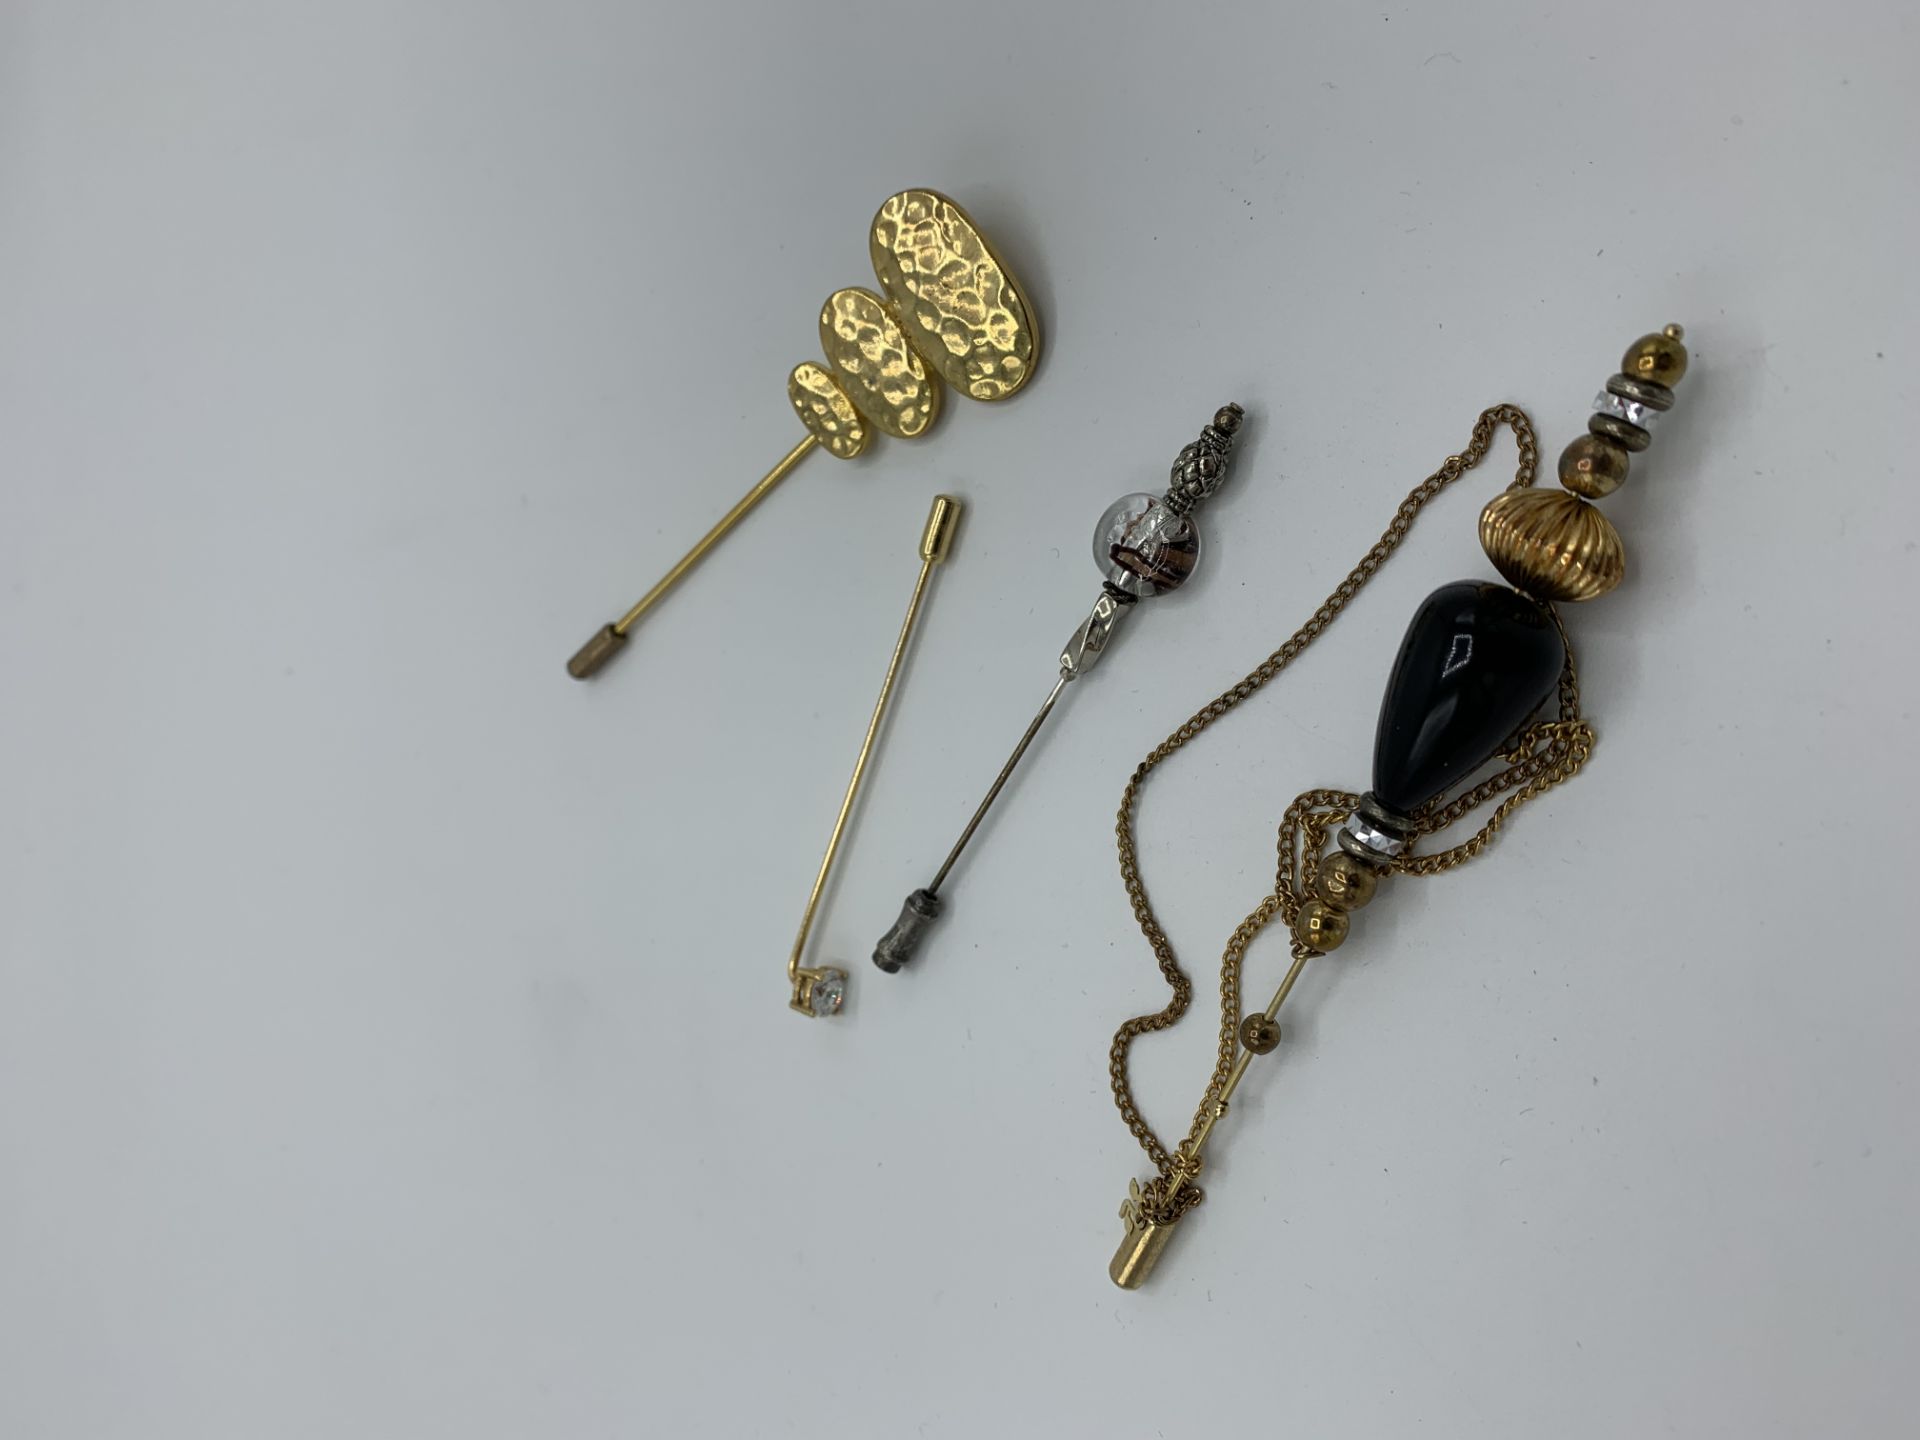 4 decorative hat pins. Estimate £10-20. - Image 2 of 2